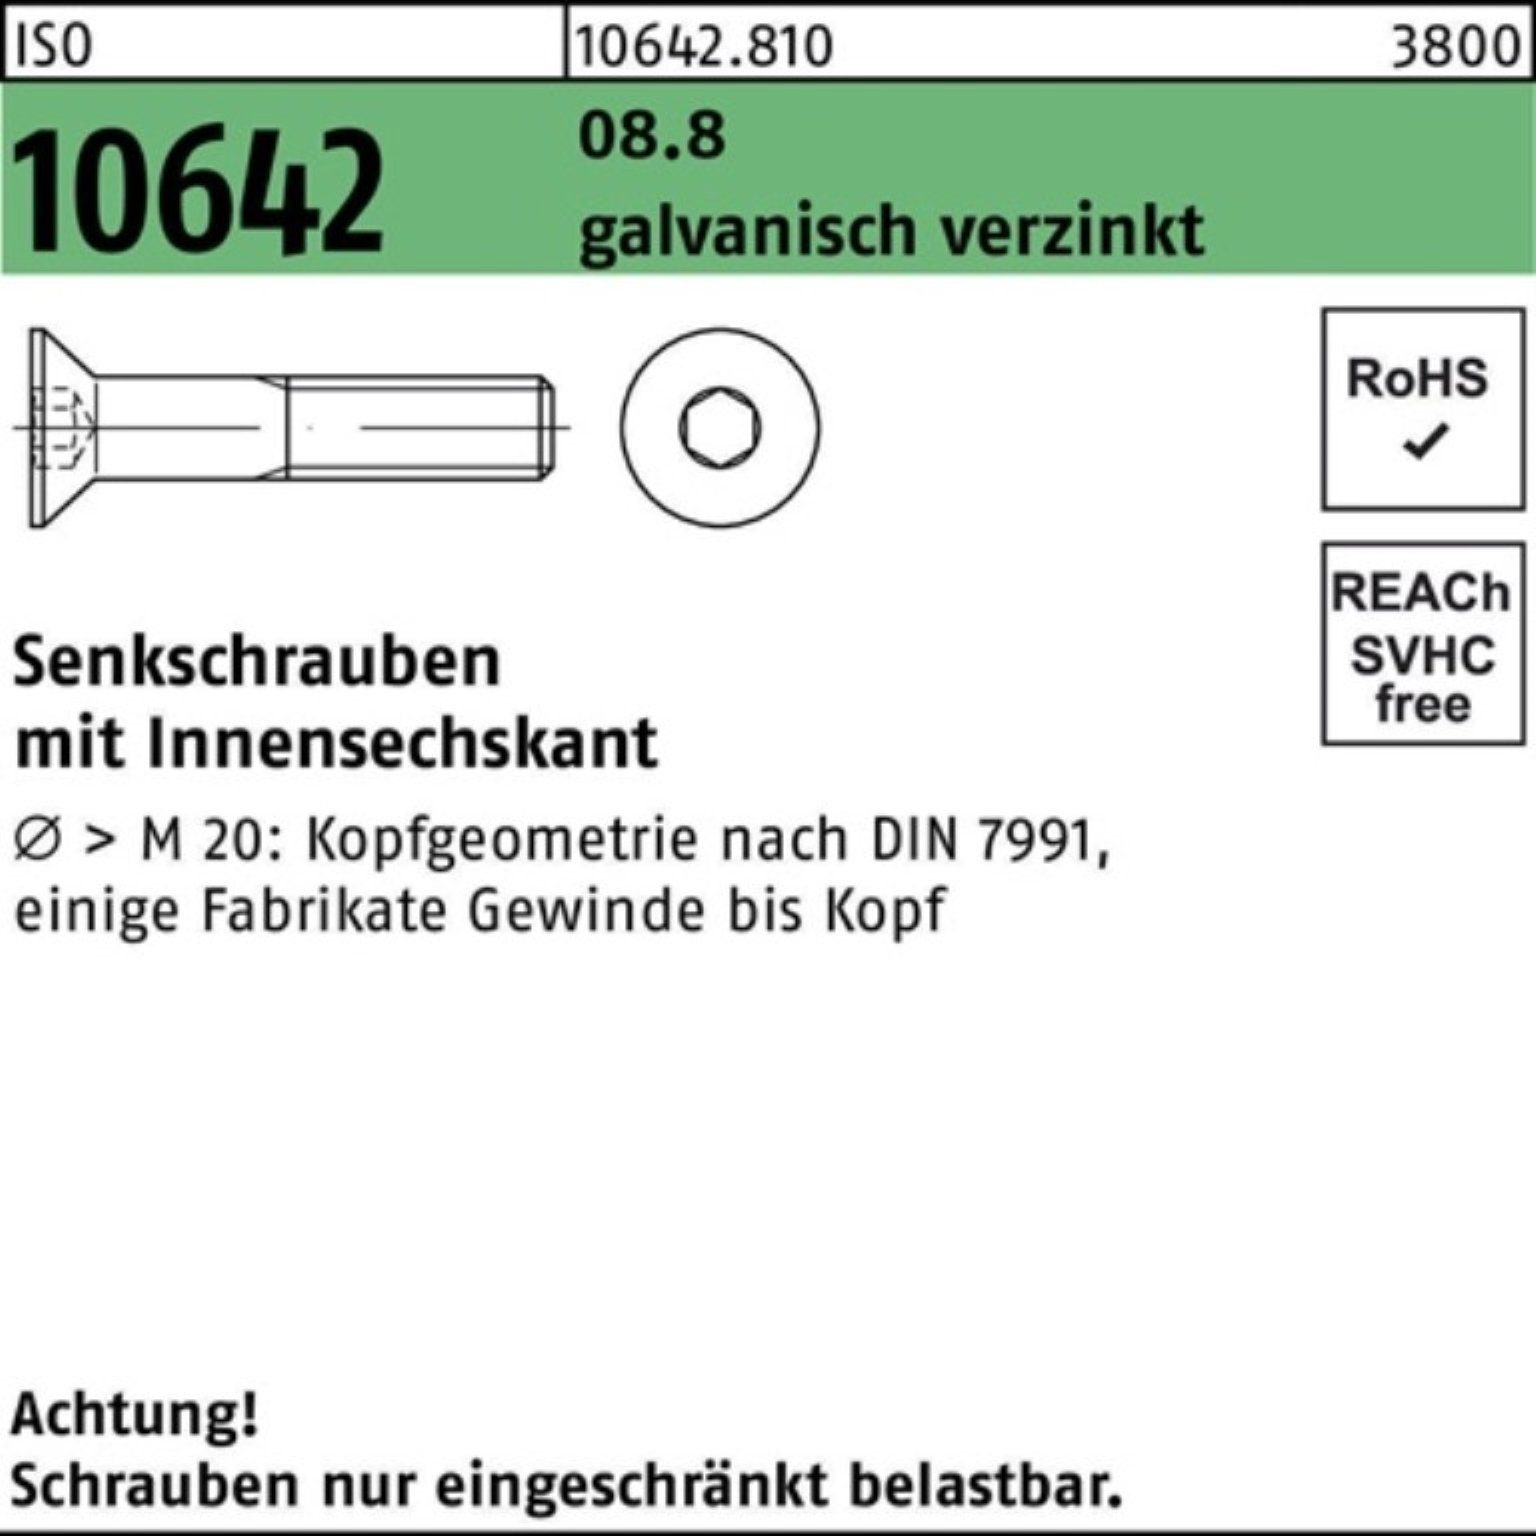 Reyher Senkschraube 500er Pack Senkschraube 10 M3x 500 8.8 10642 Innen-6kt galv.verz. ISO